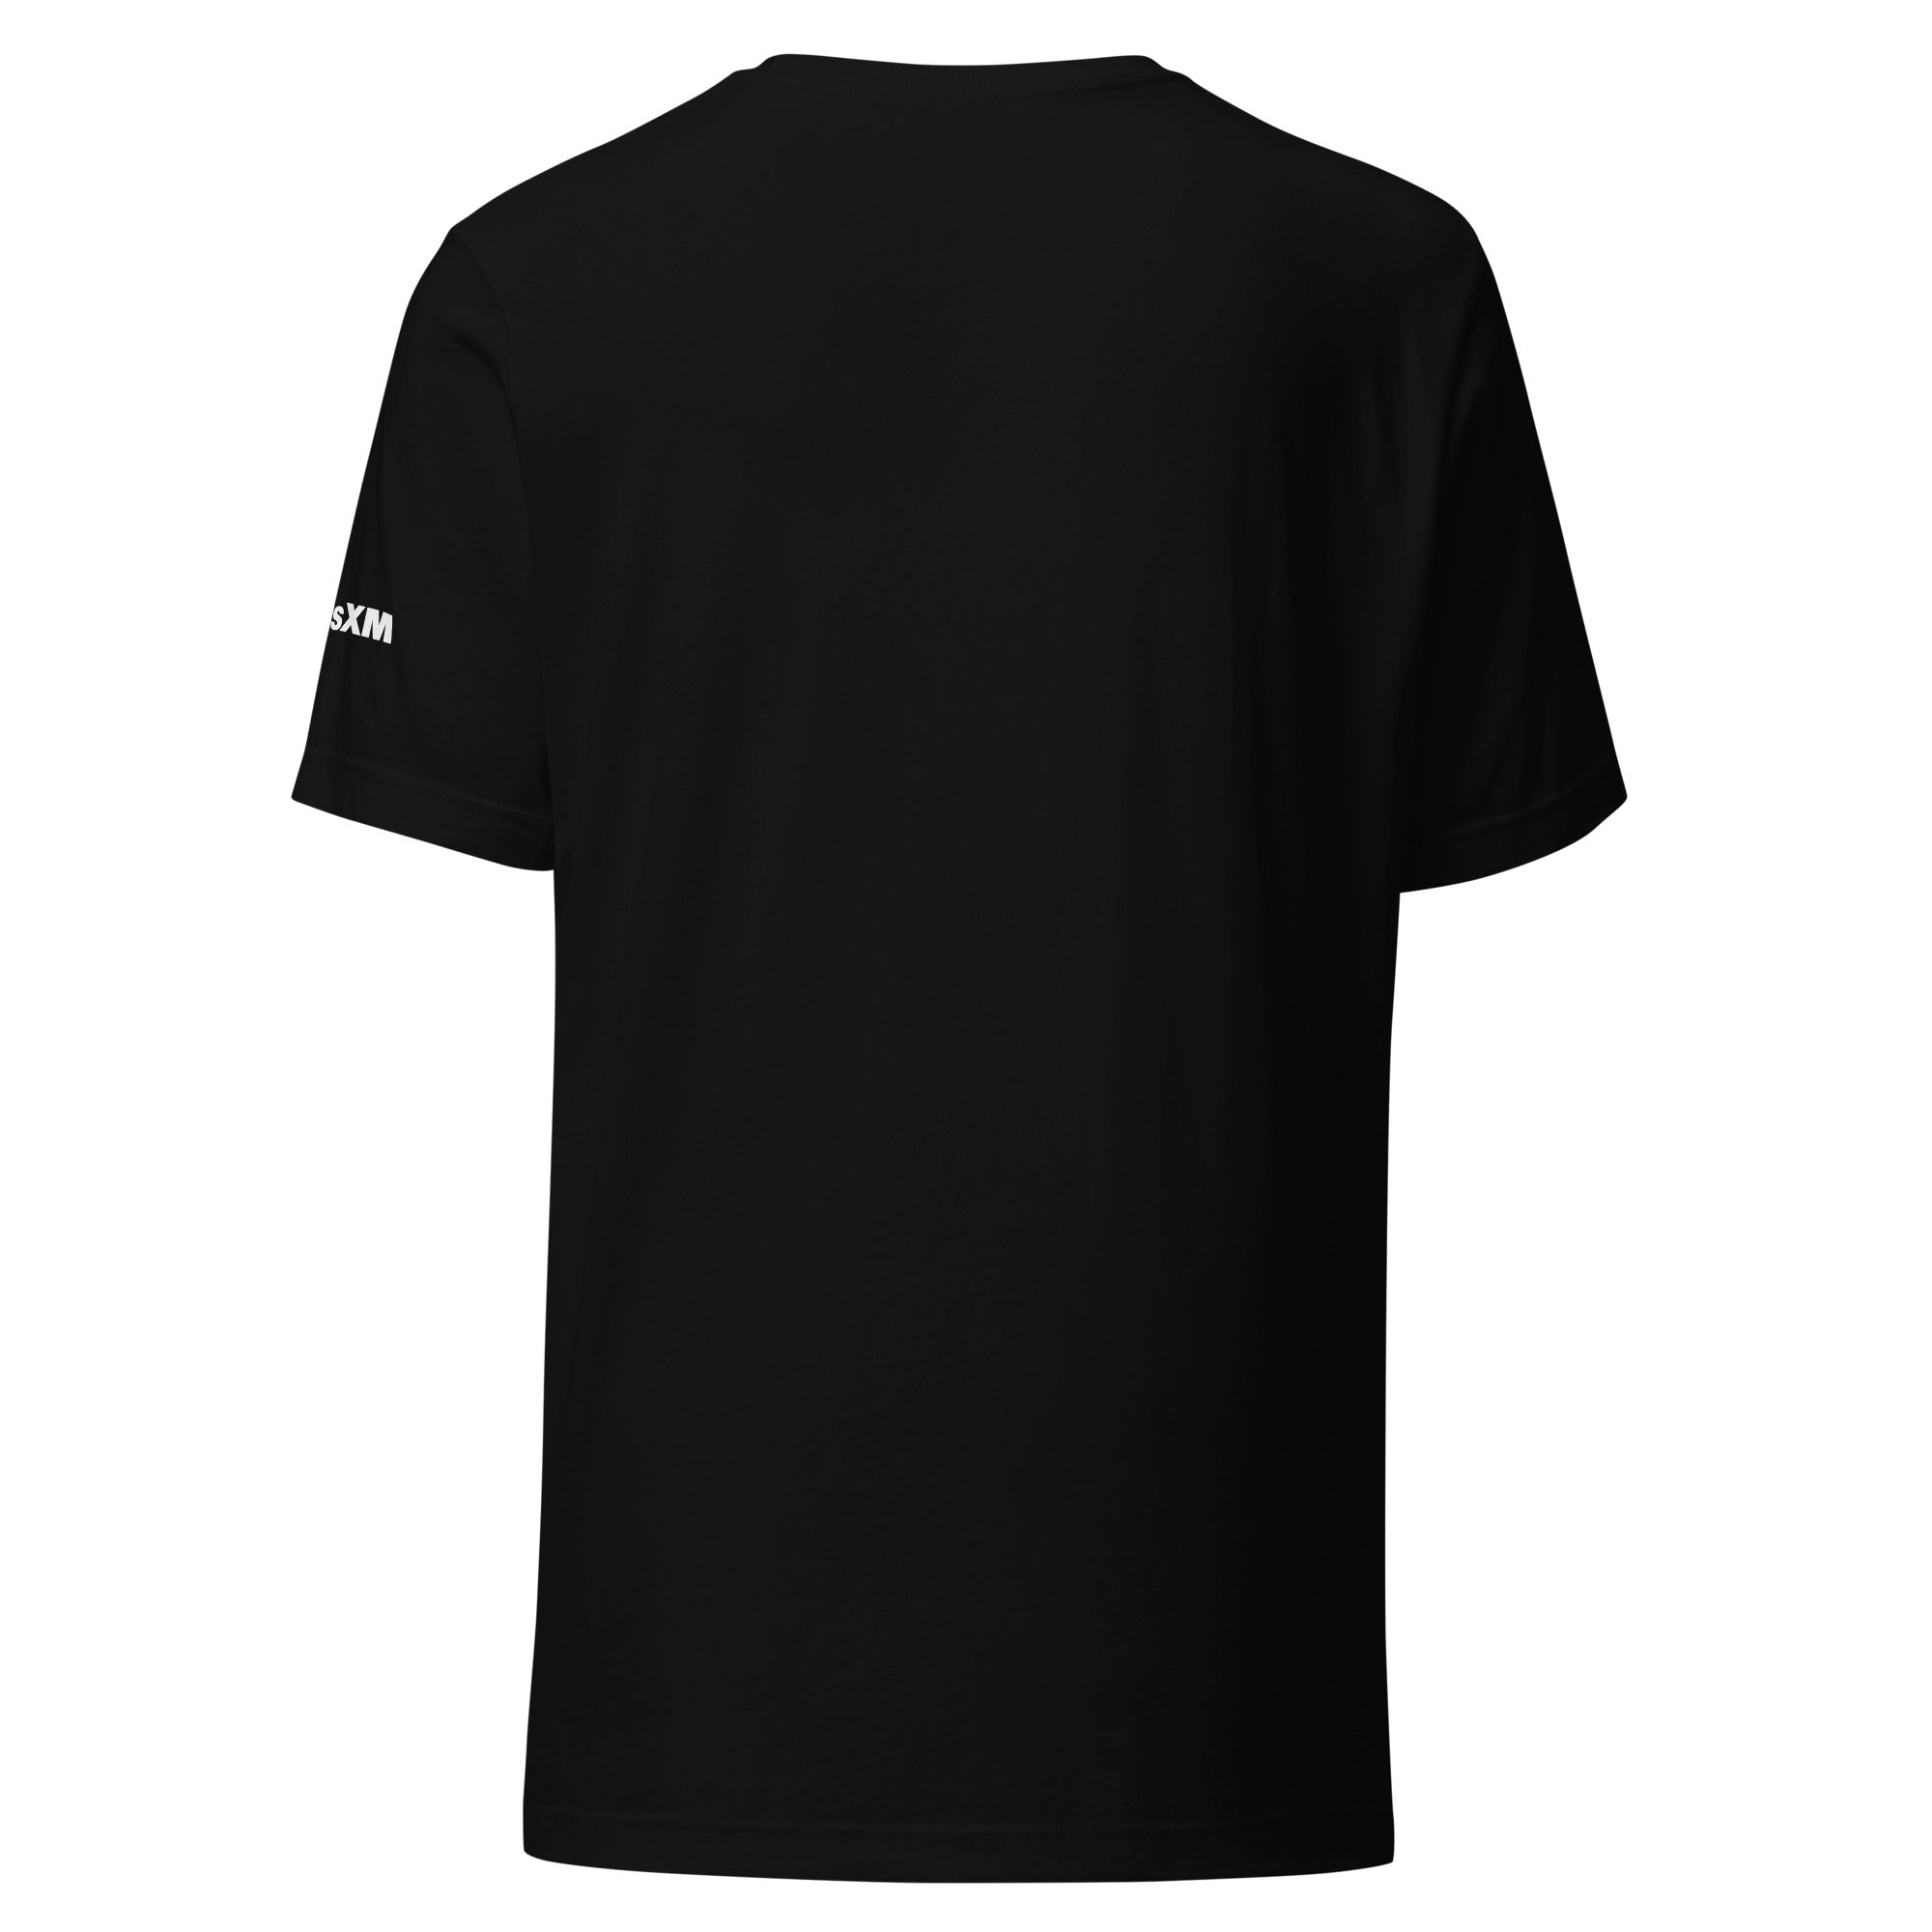 Spa: T-shirt (Black)